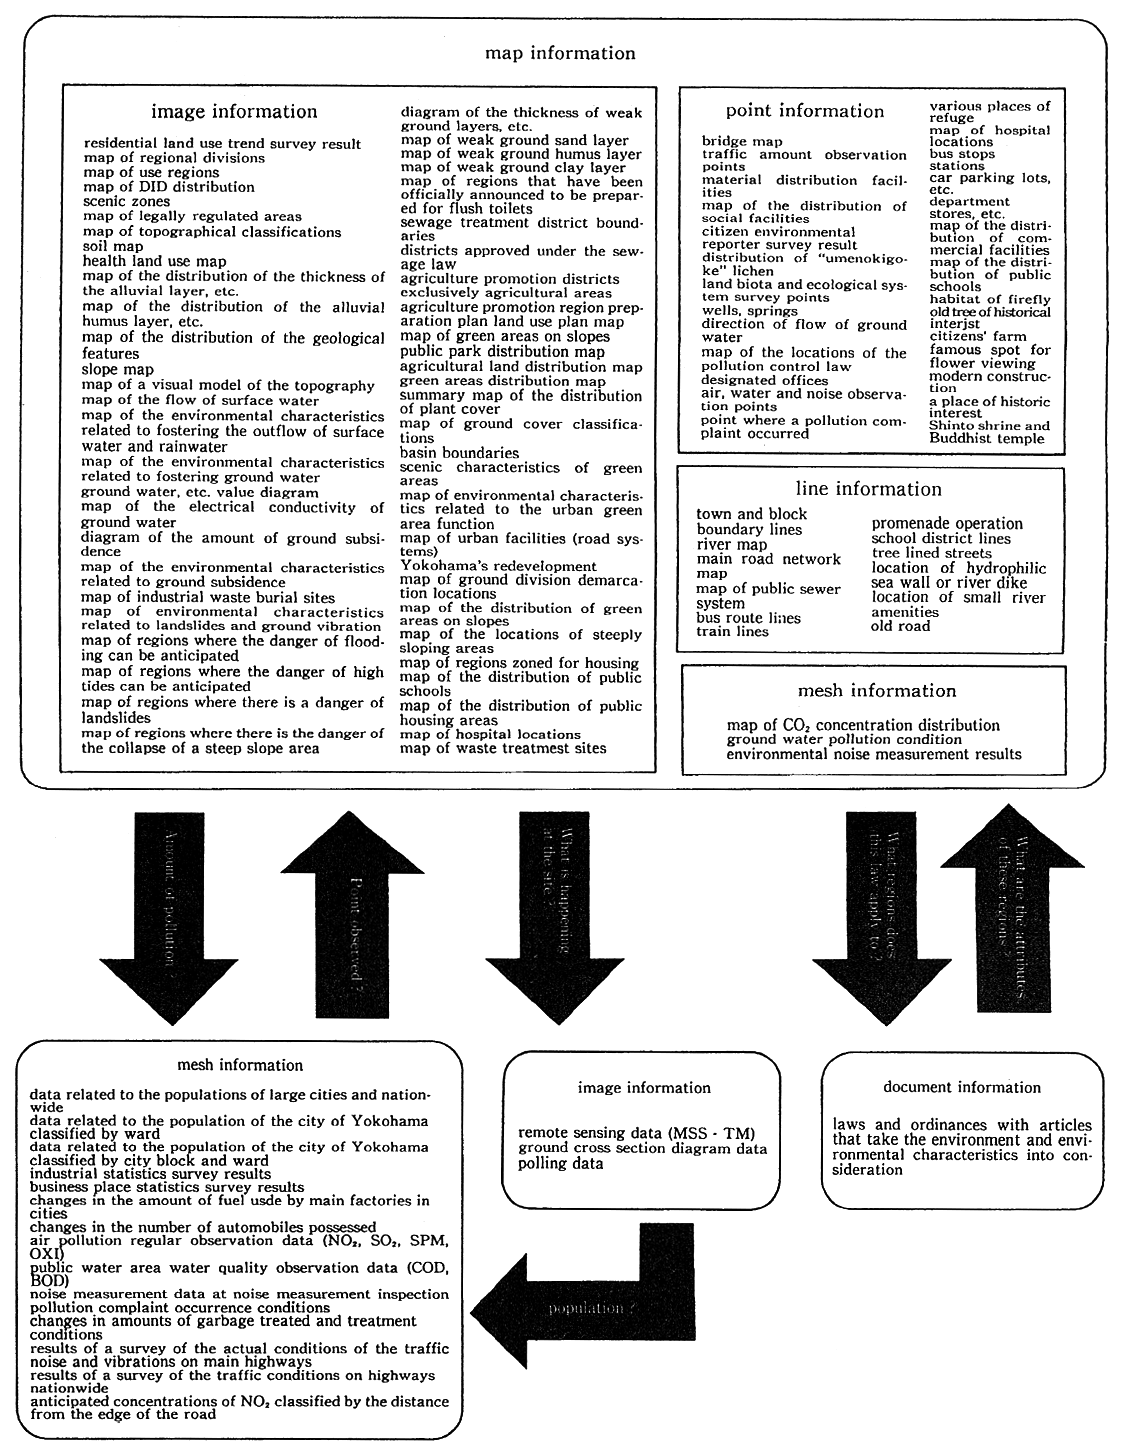 Fig. 4-4-2 Environmental Information System Data List